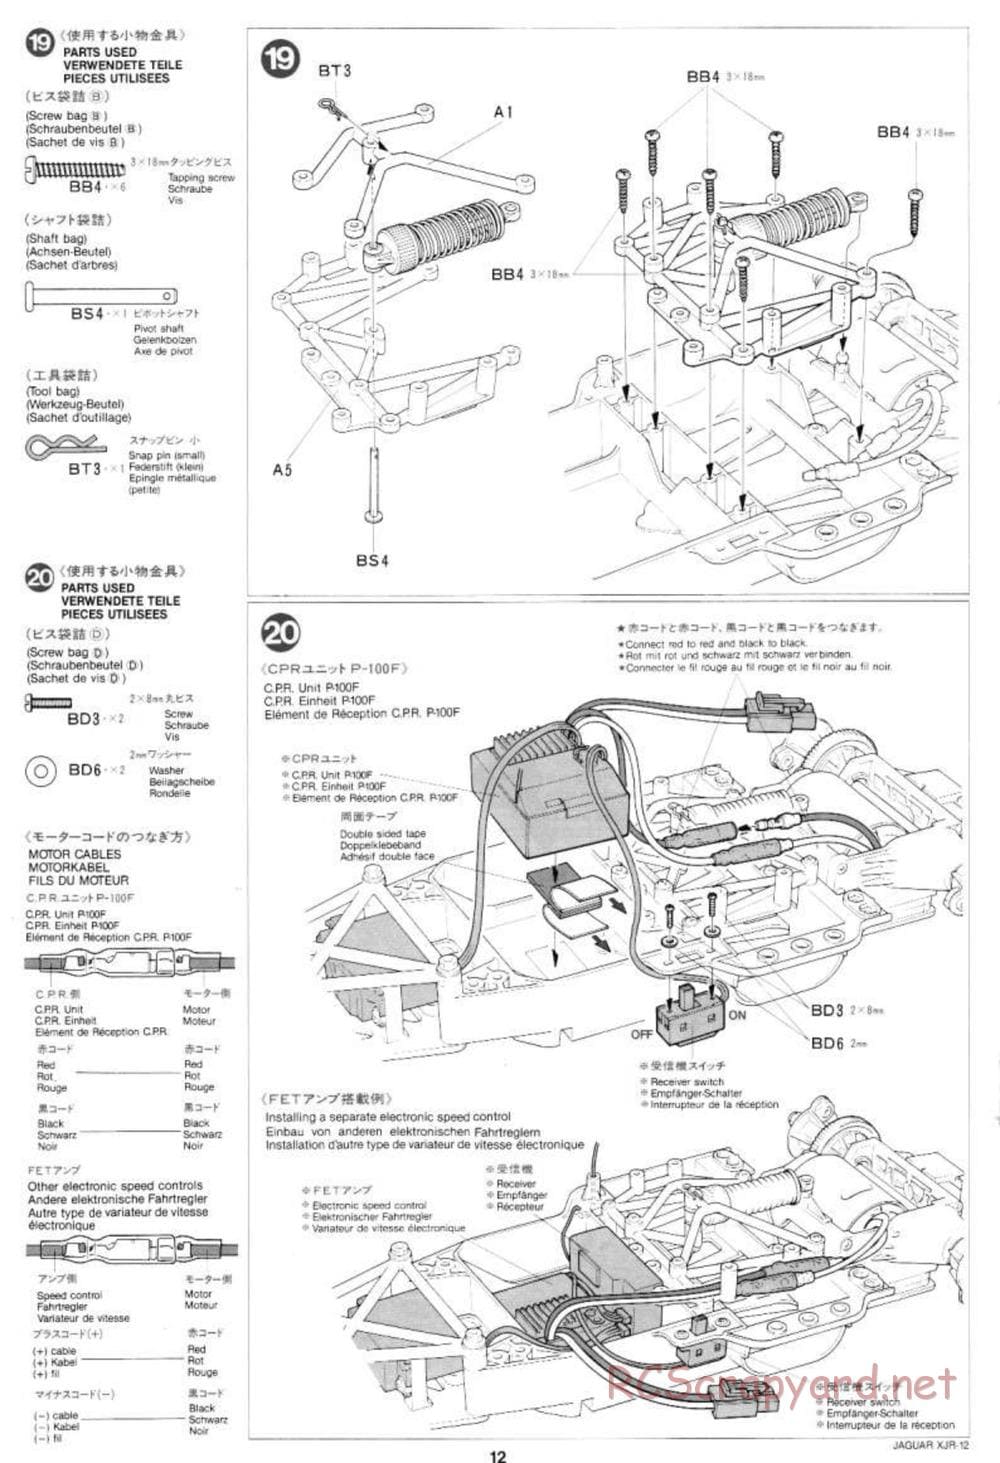 Tamiya - Jaguar XJR-12 Daytona Winner - Group-C Chassis - Manual - Page 12